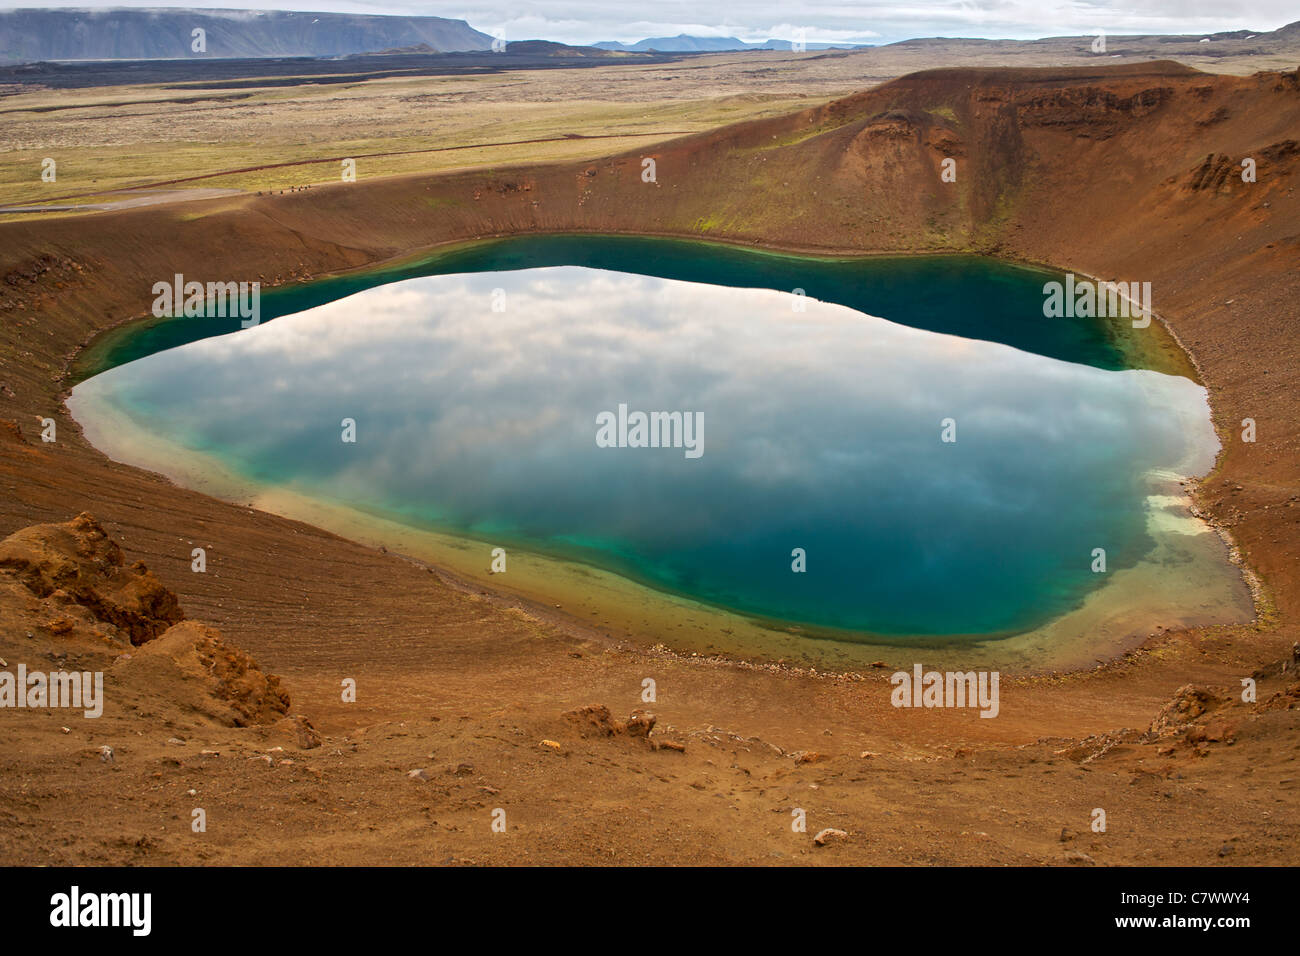 La viti Crater Lake dans la caldeira de Krafla près de 73320 dans le nord-est de l'Islande. Banque D'Images